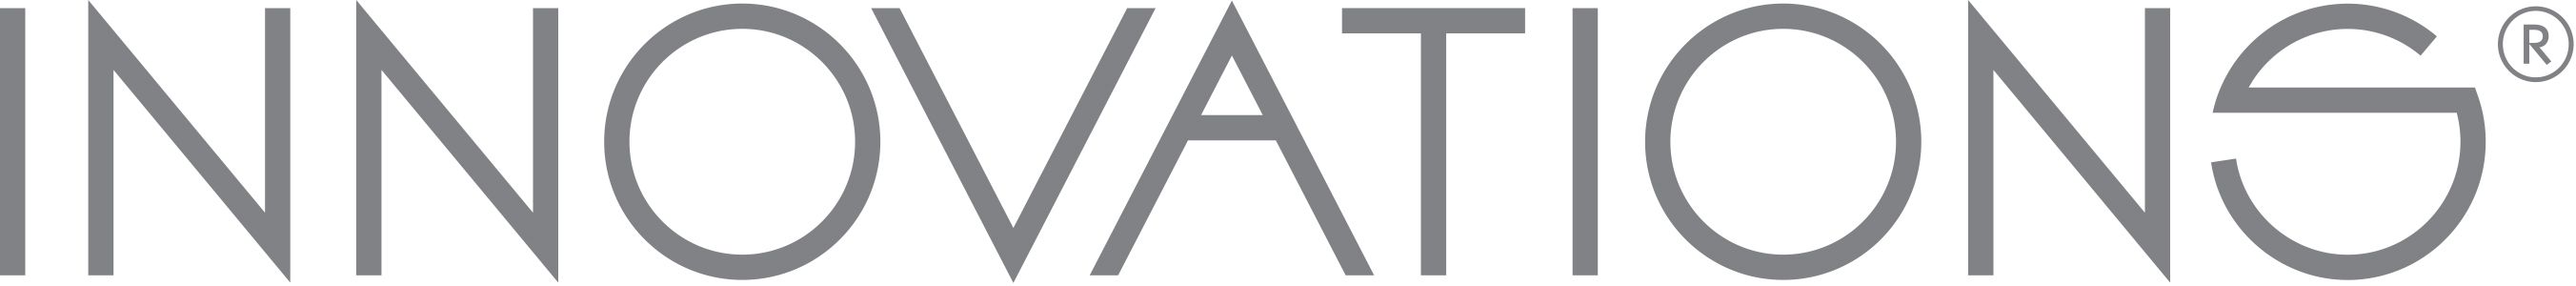 Image result for innovations wallcovering logo